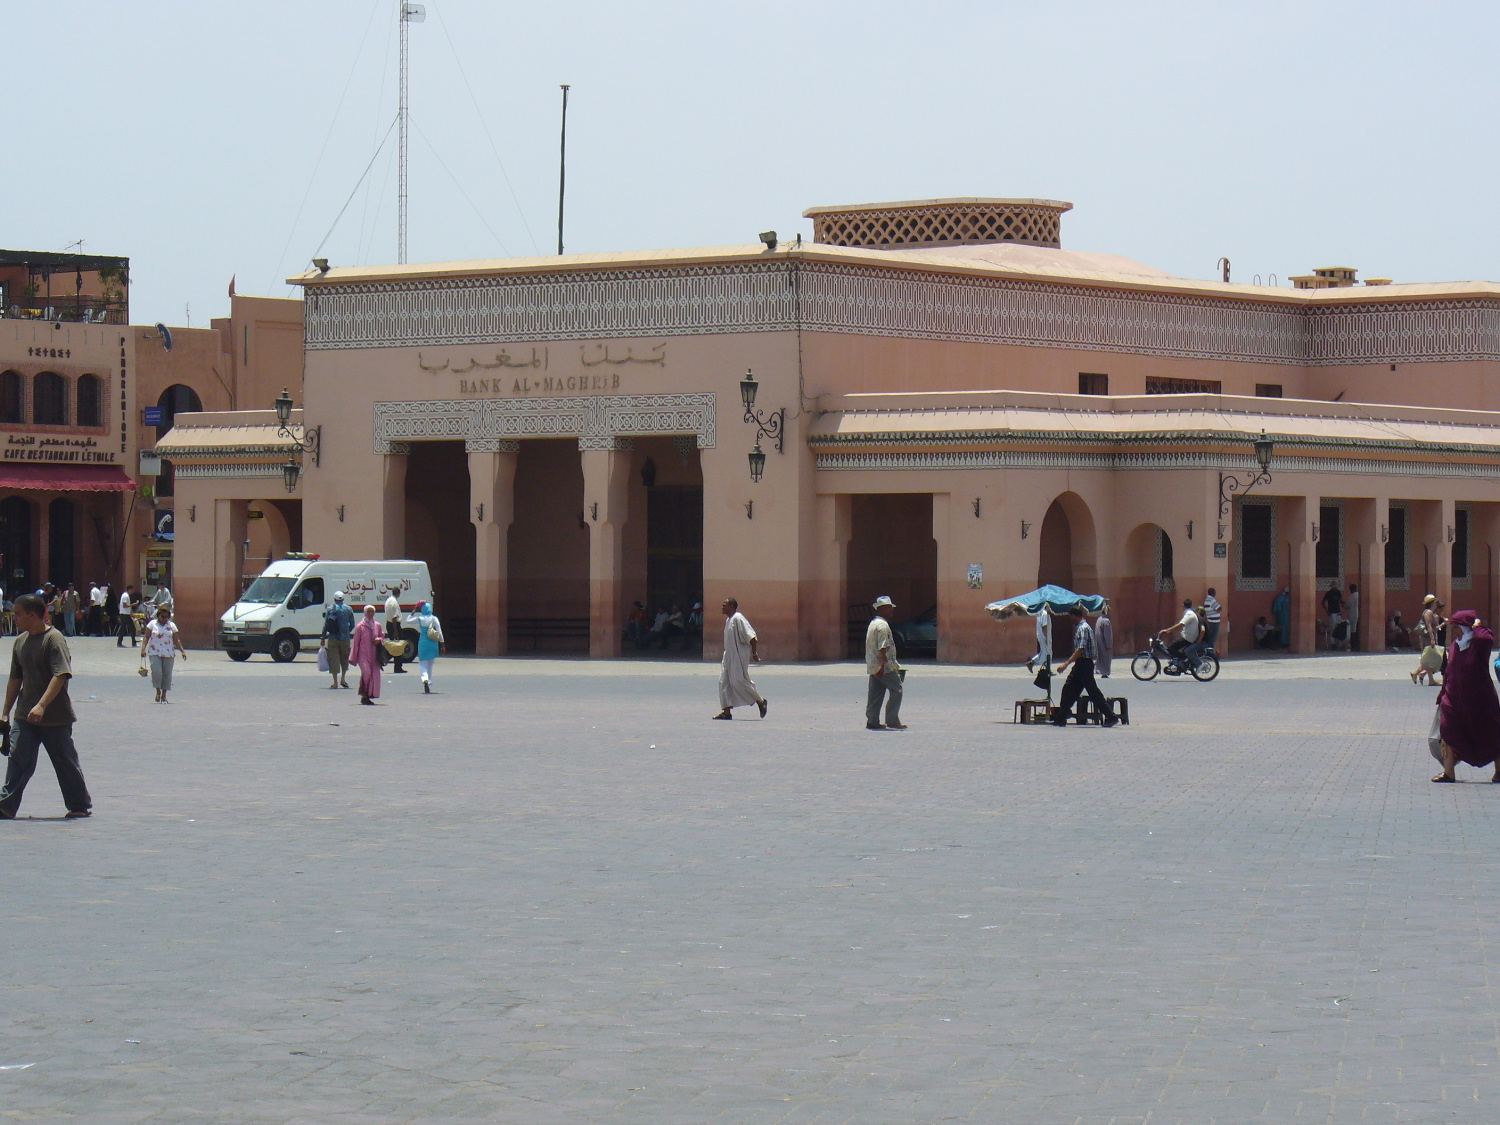 Bank al-Maghreb in the square